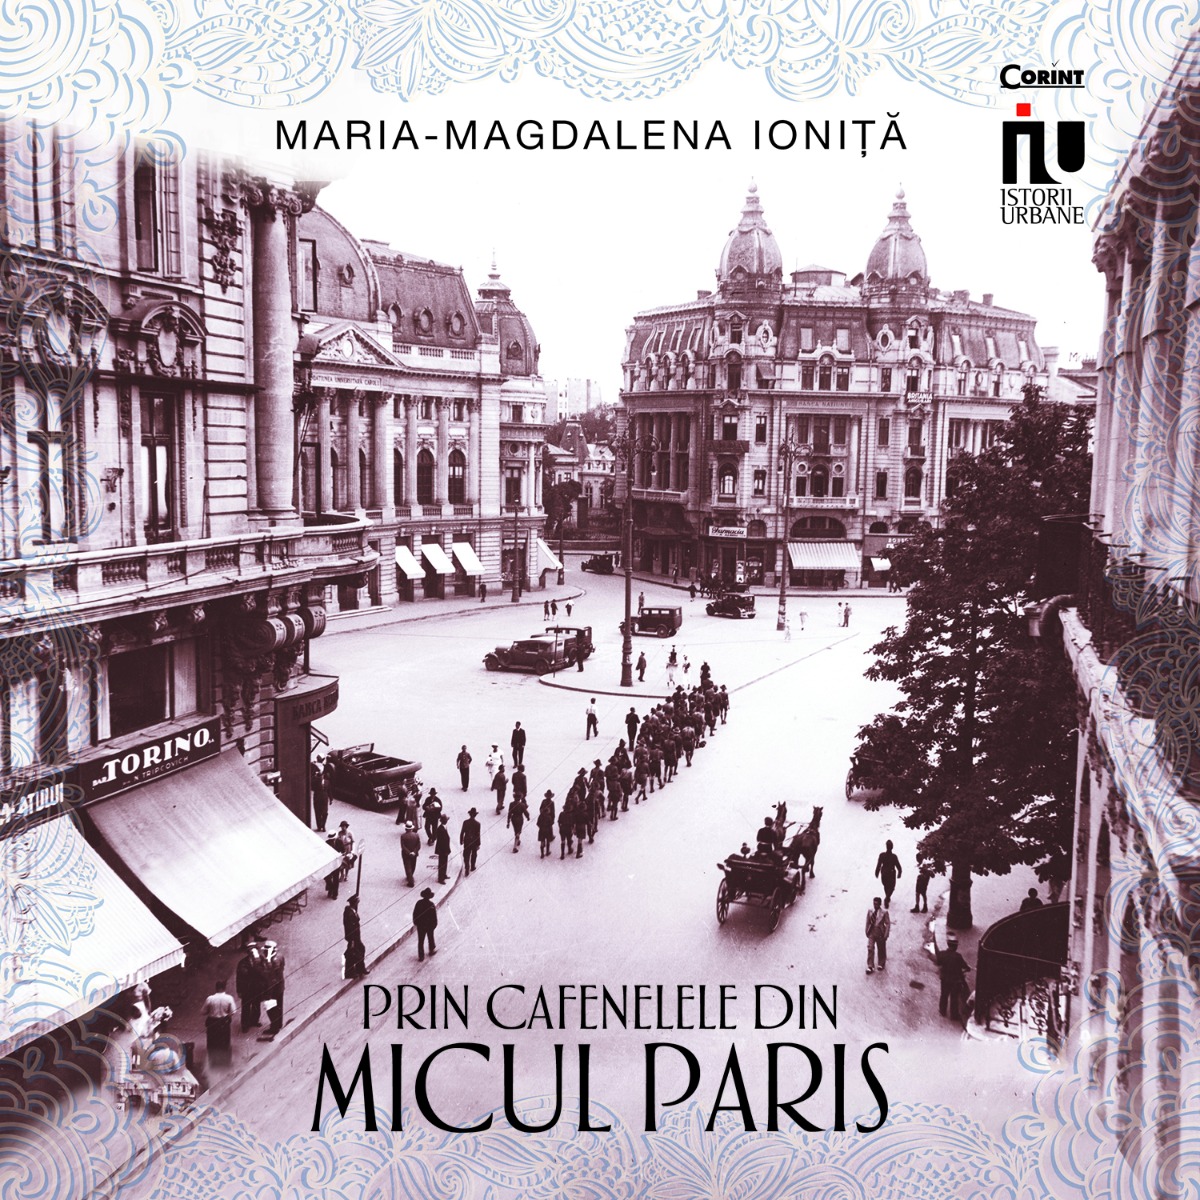 Carte Editura Corint, Prin cafenelele din micul Paris, Maria-Magdalena Ionita